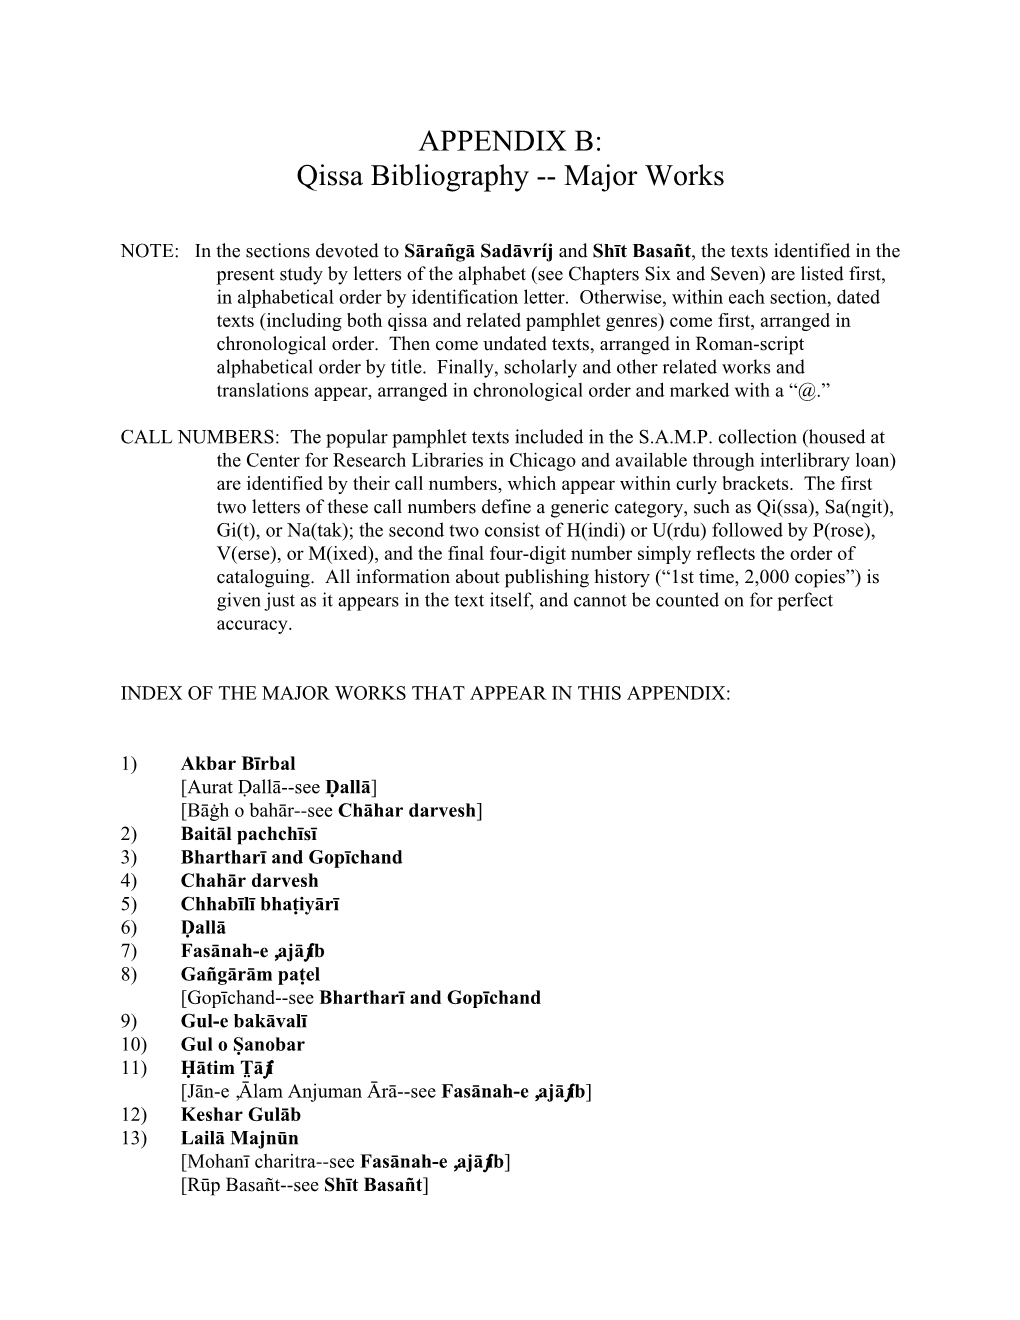 APPENDIX B: Qissa Bibliography -- Major Works